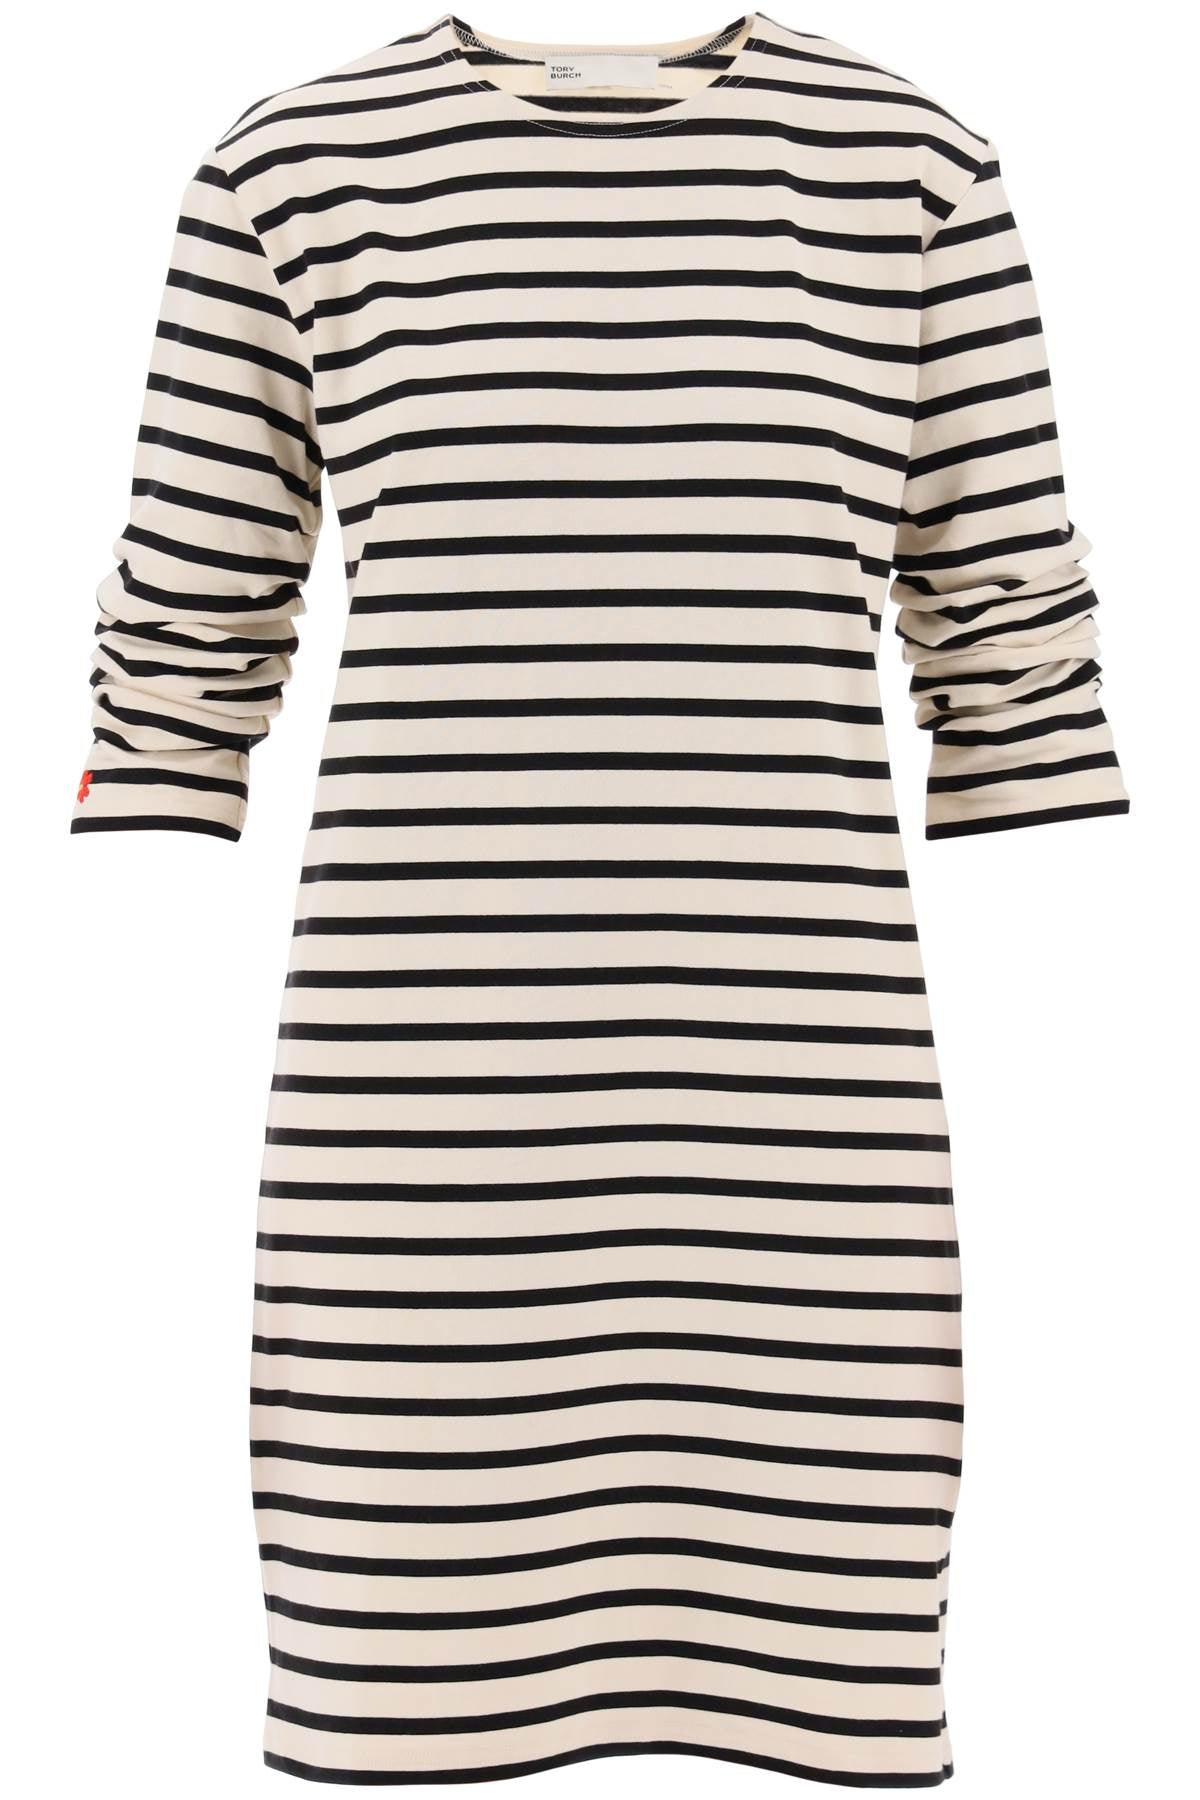 TORY BURCH Nautical-Inspired Striped Cotton Dress for Women